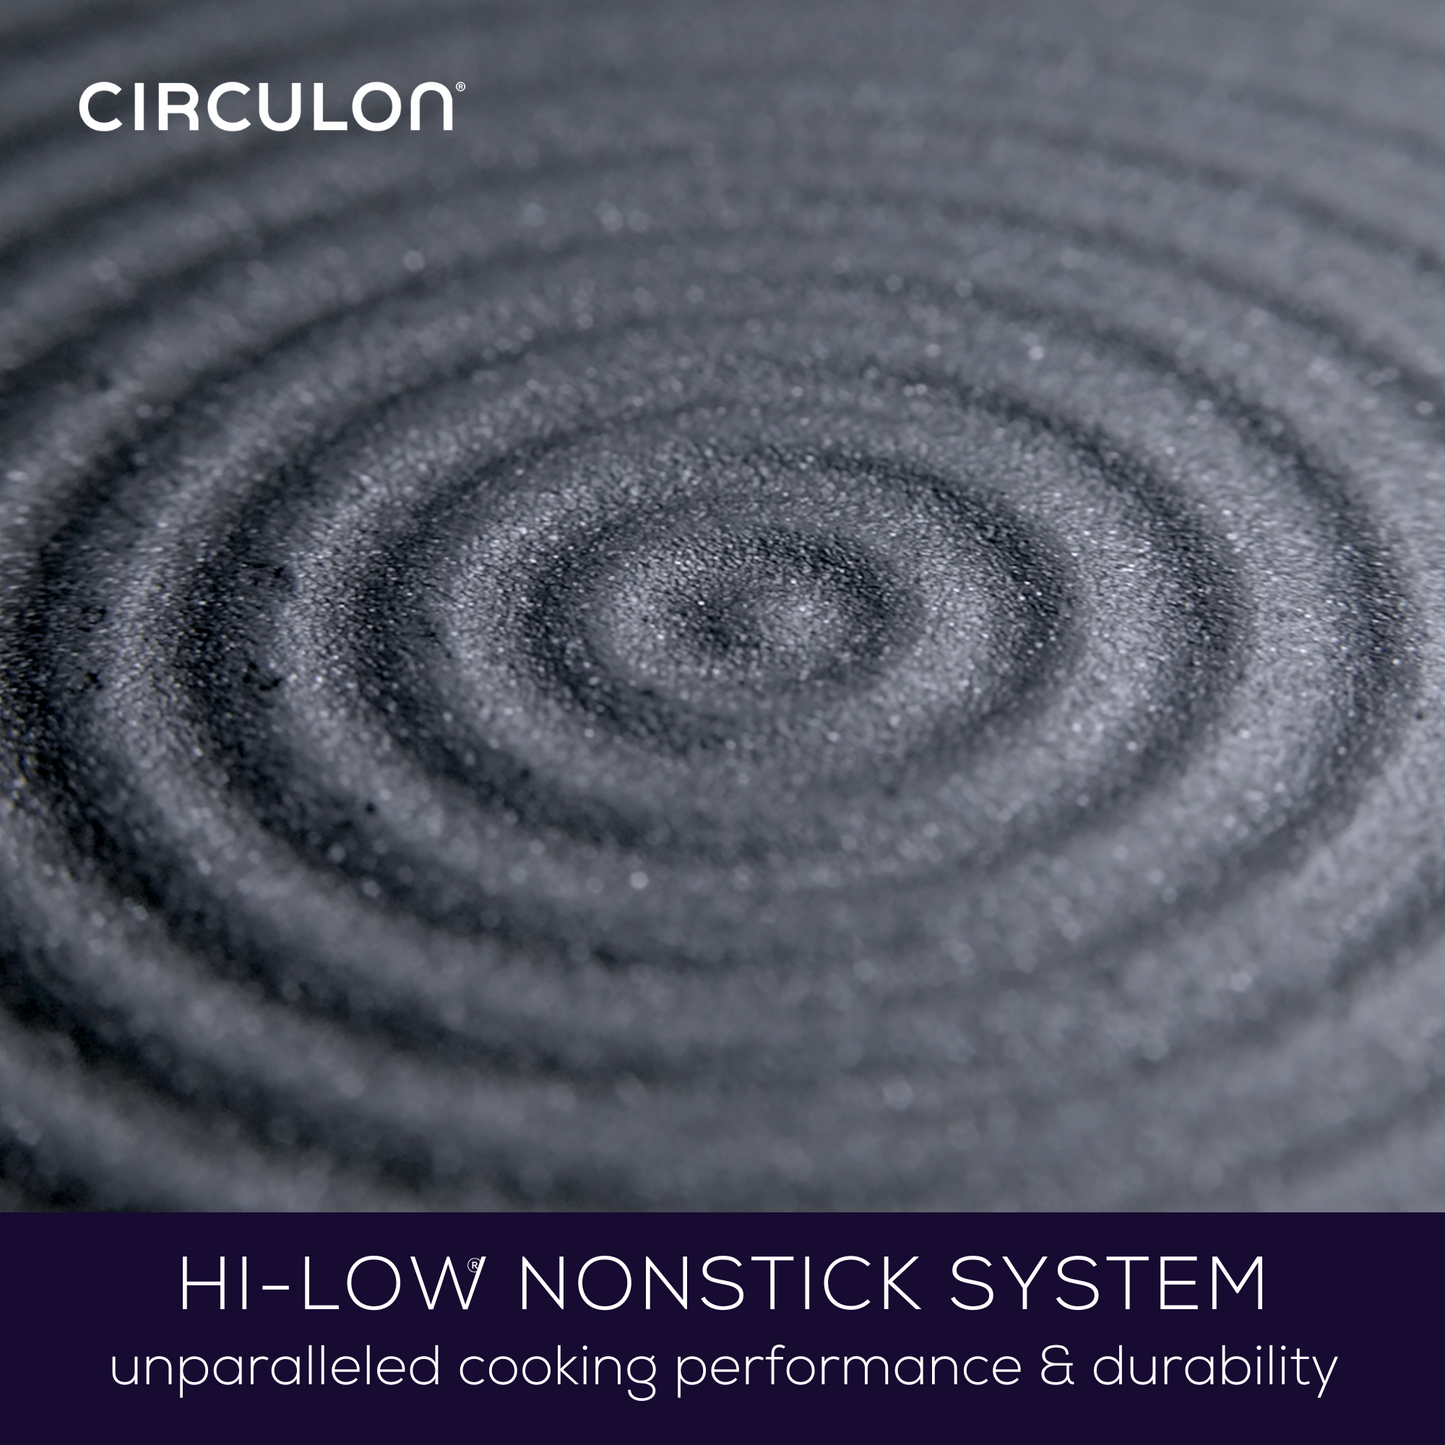 Circulon Total Nonstick Induction Skillet Triple Pack 22/25/31cm